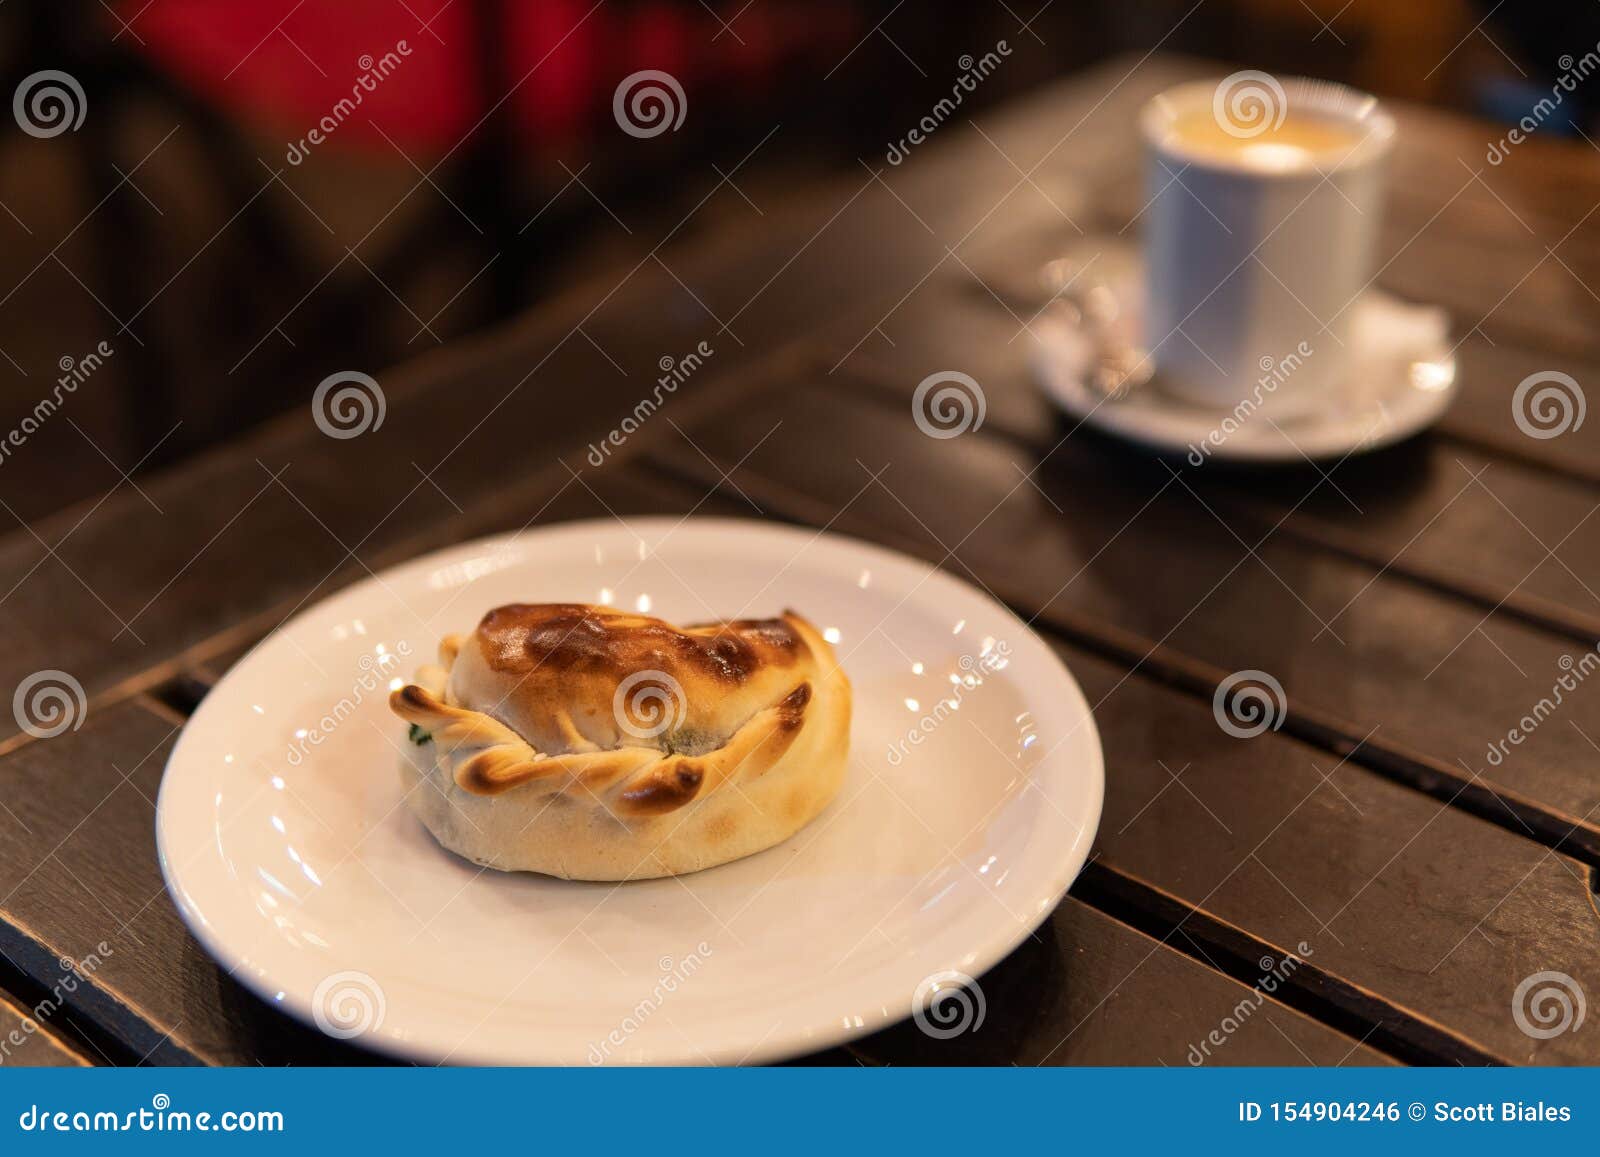 empanada on plate with coffee